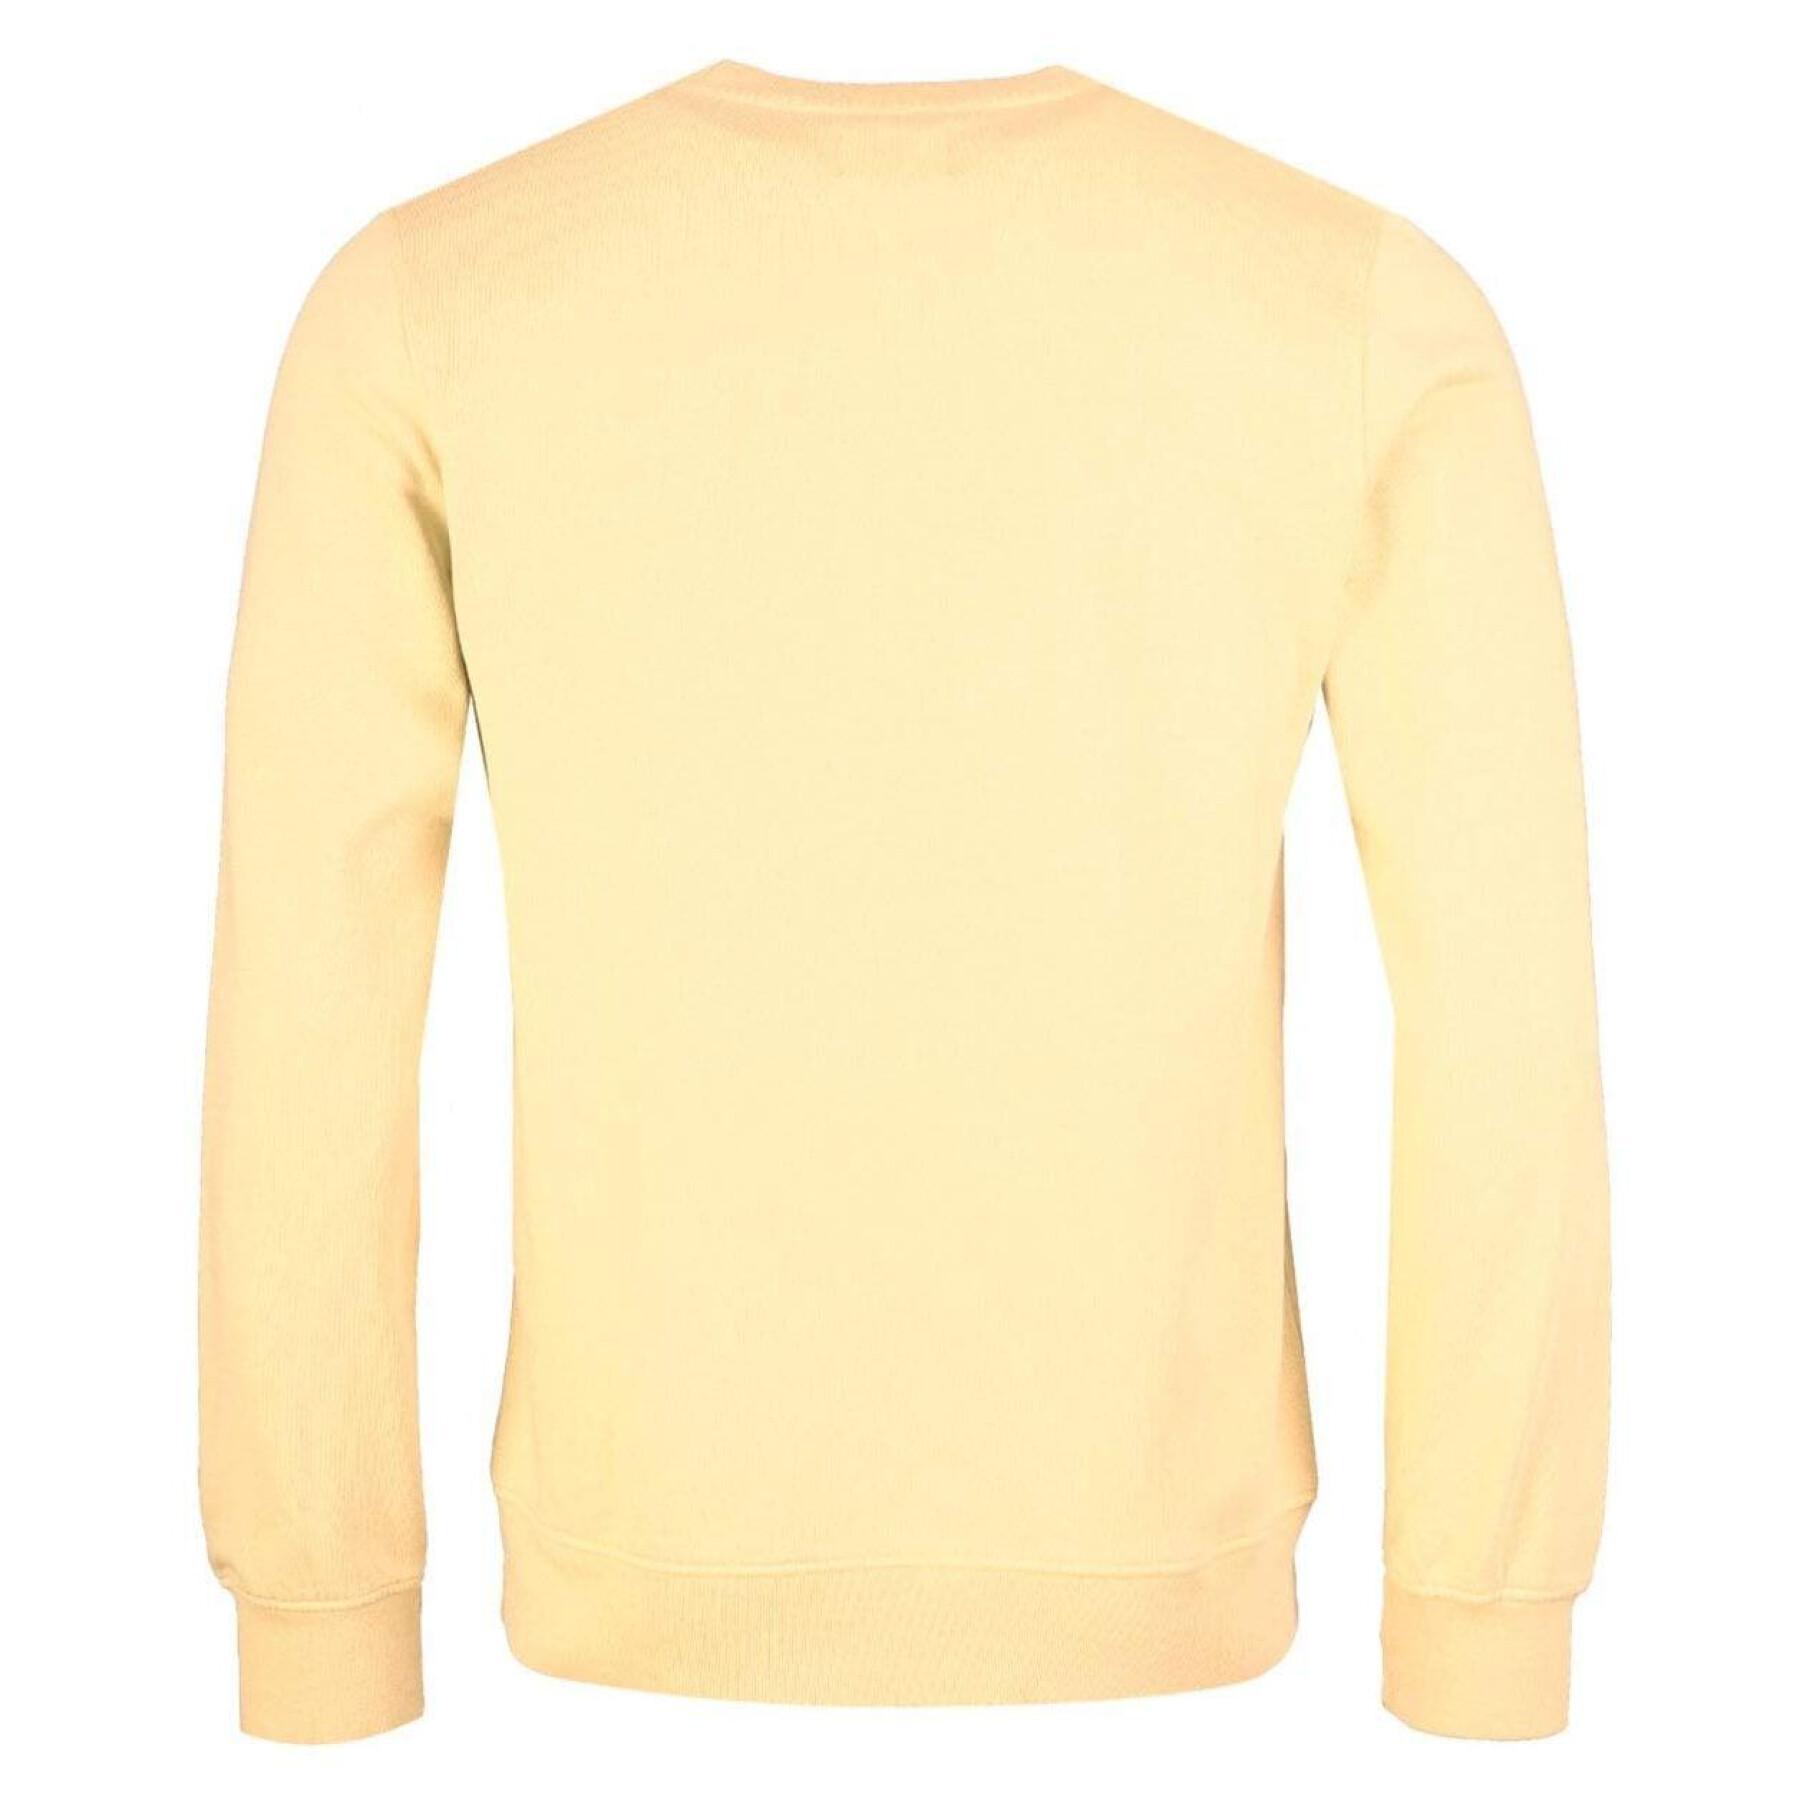 Sweatshirt pescoço redondo Colorful Standard Classic Organic soft yellow